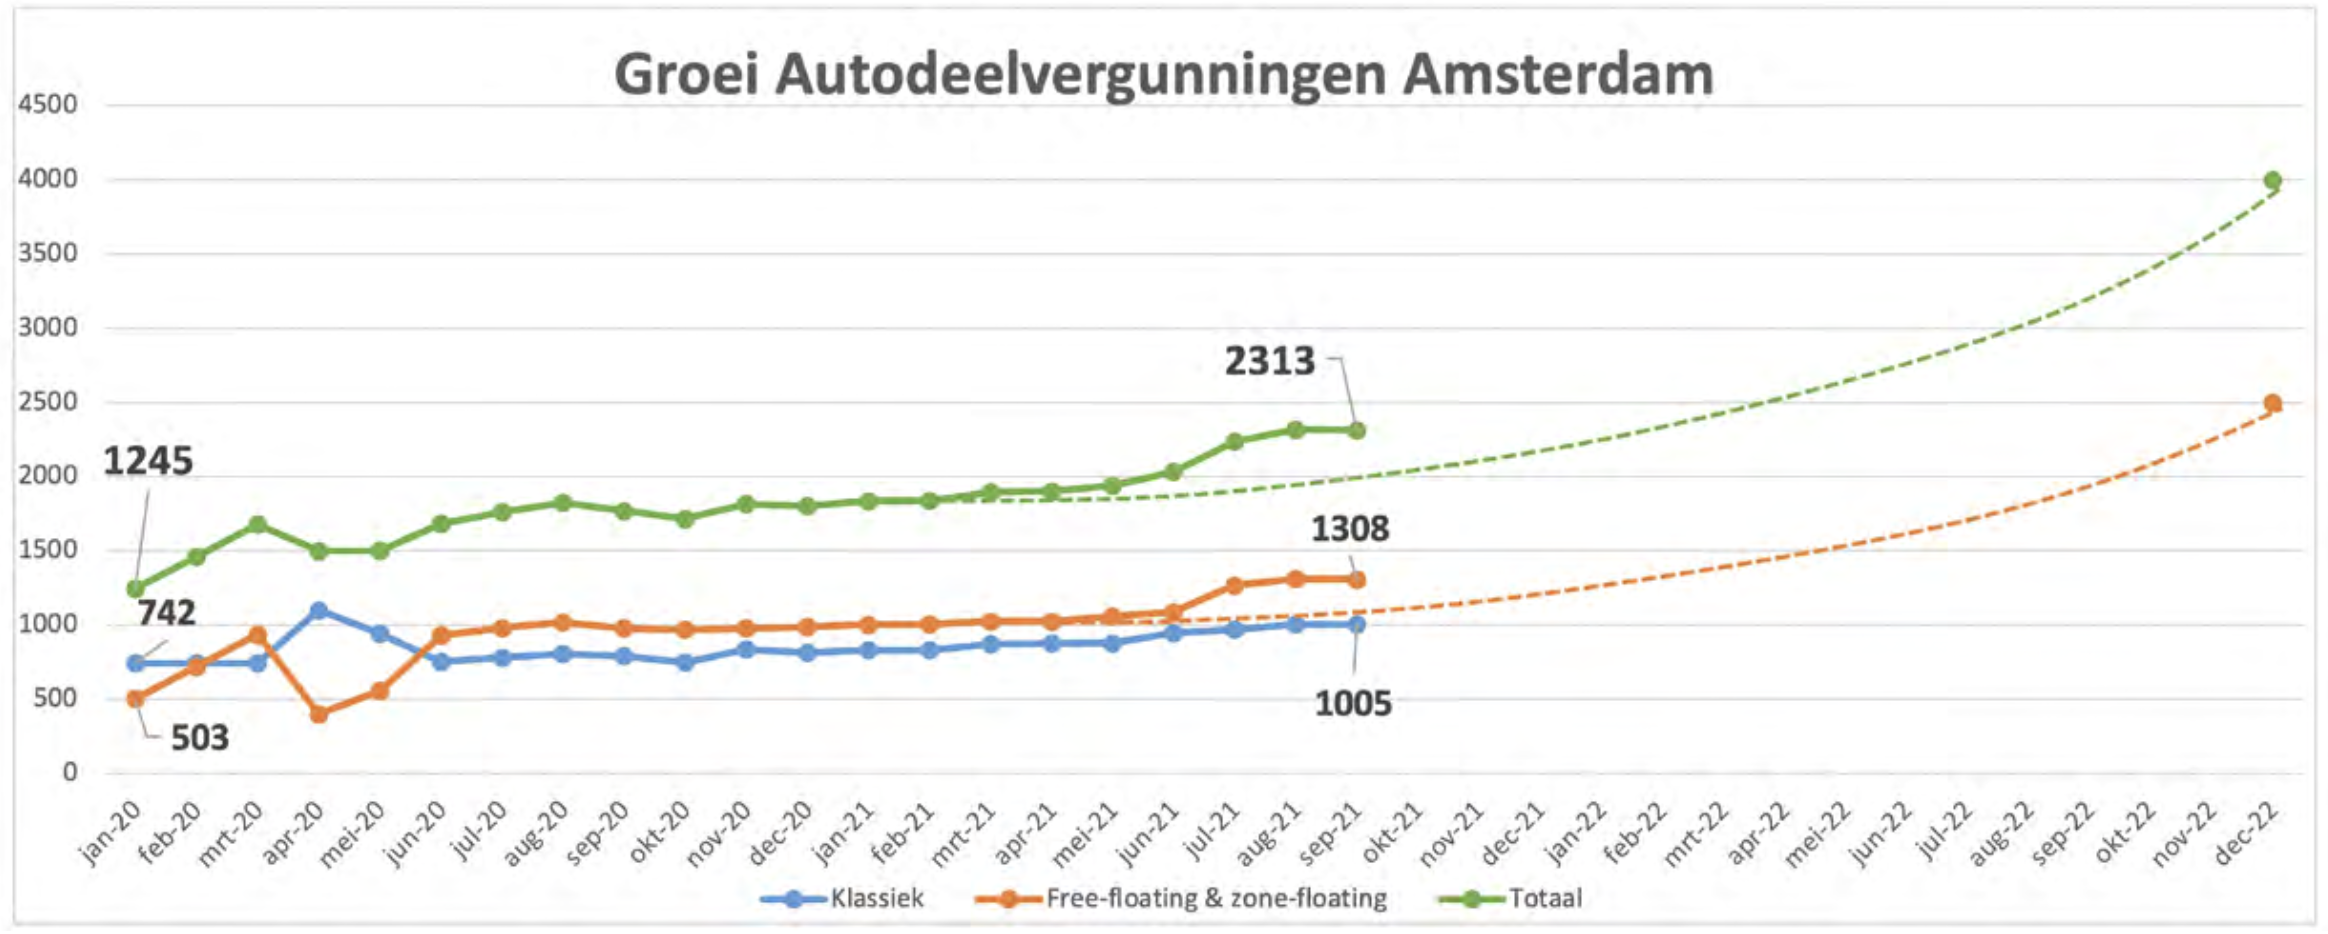 Groei autodeelvergunningen Amsterdam